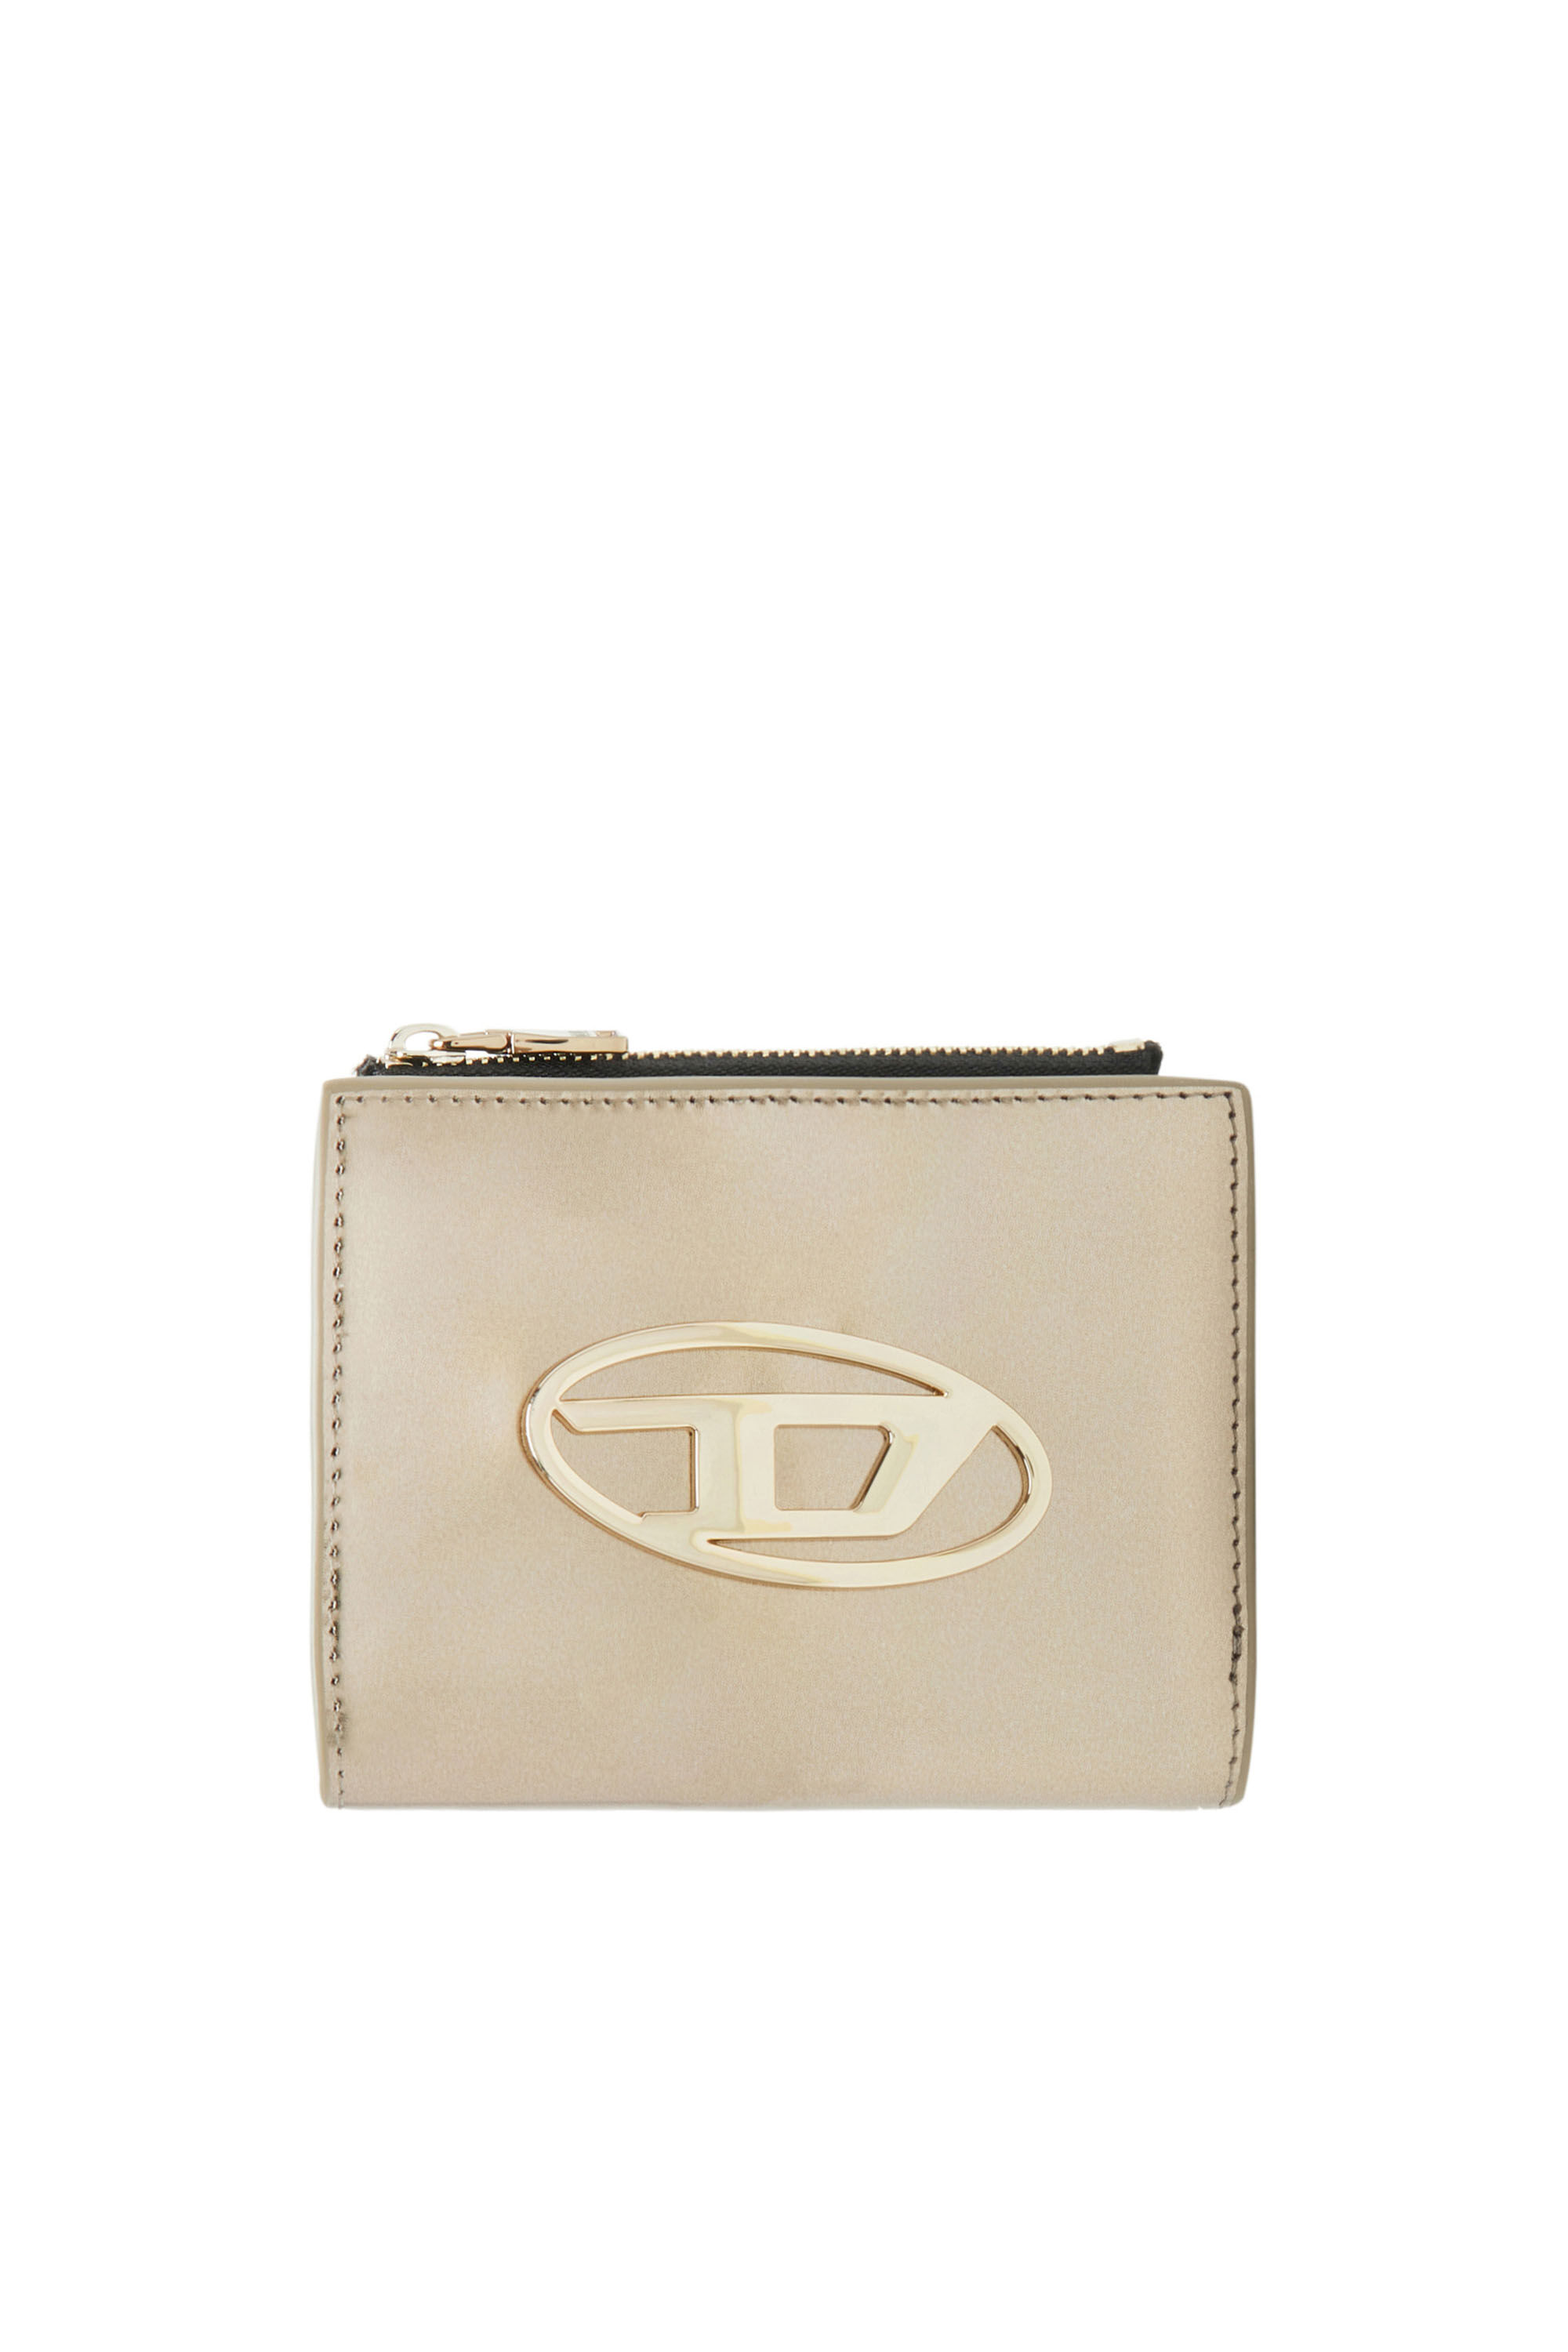 Diesel - BI-FOLD ZIP, Woman Small wallet in metallic leather in Yellow - Image 1